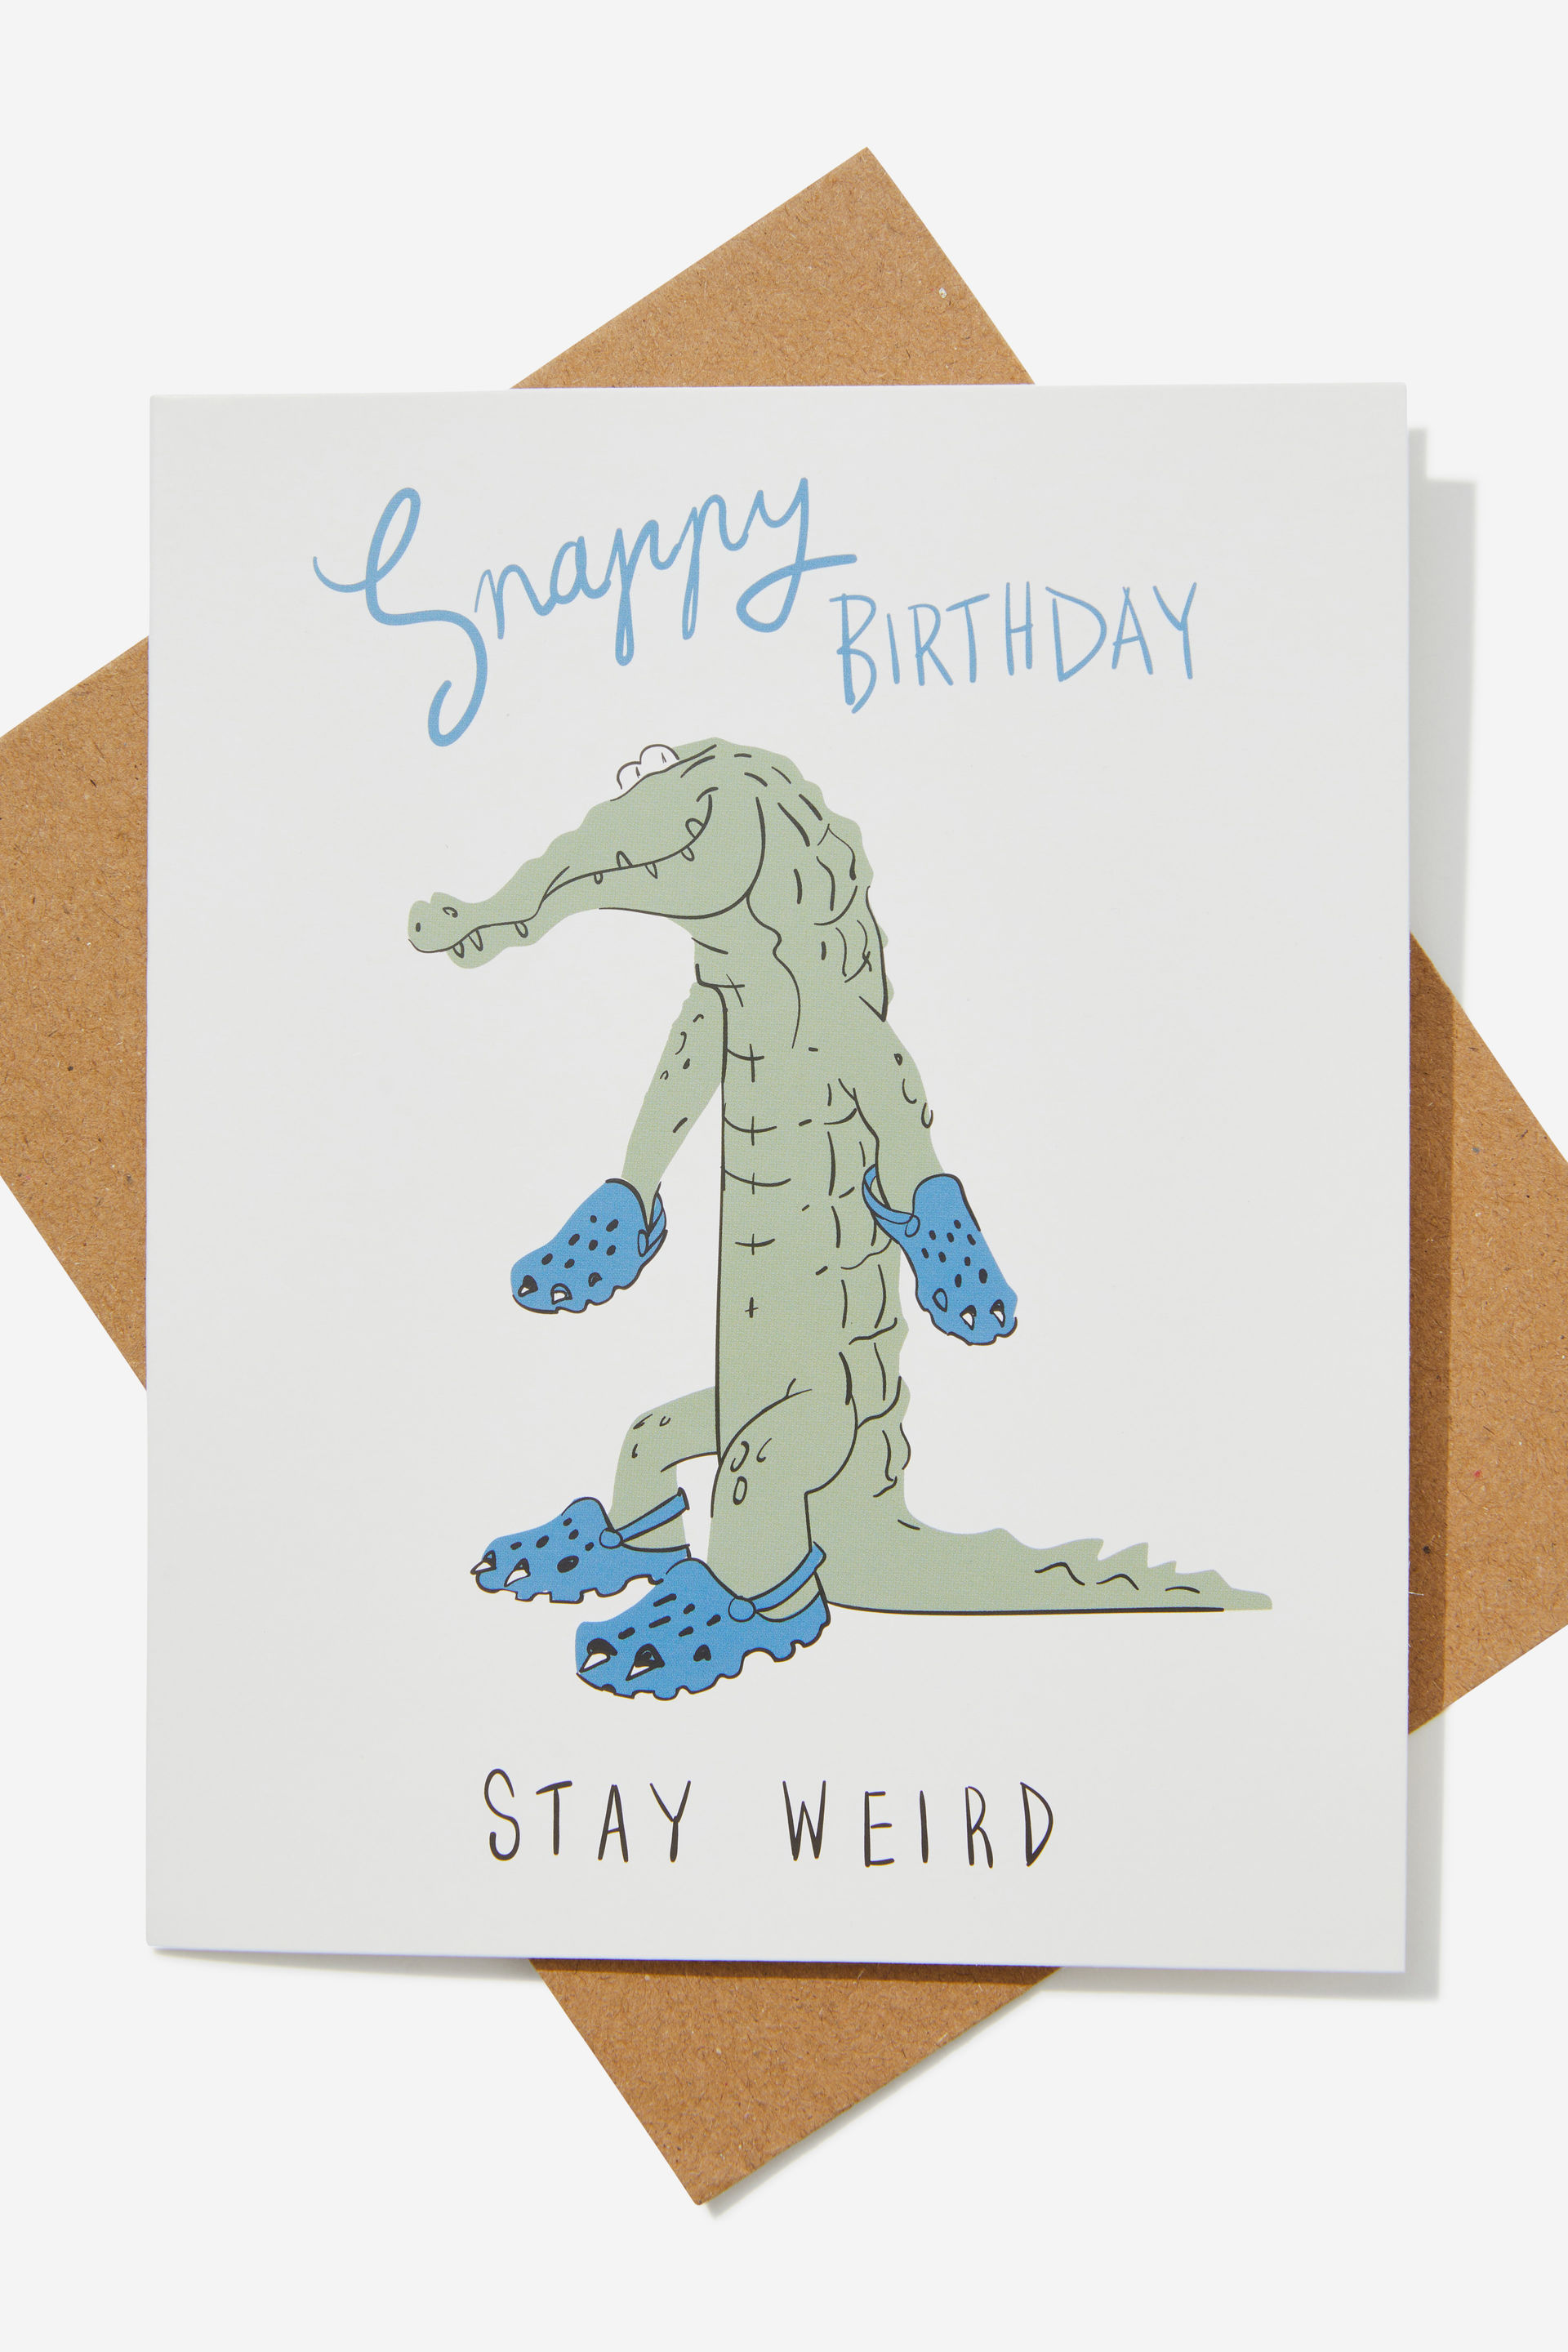 Typo - Funny Birthday Card - Snappy birthday croc